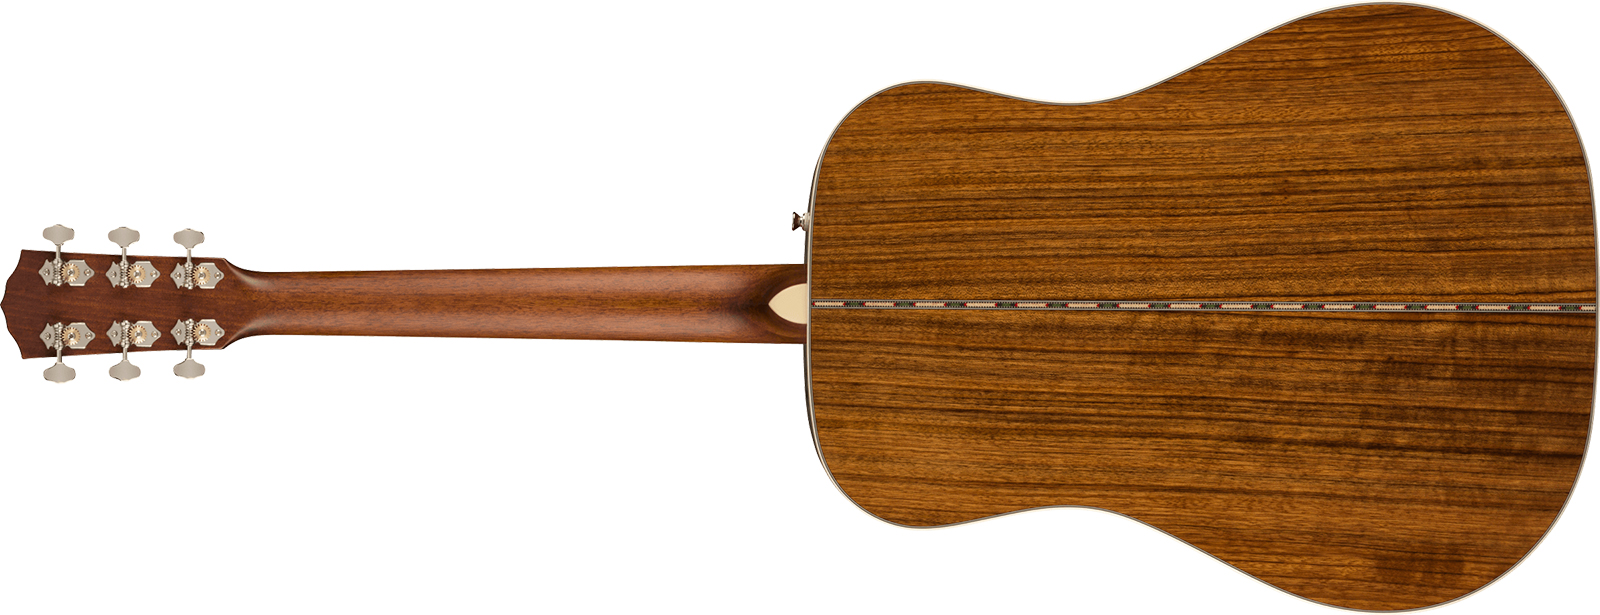 Fender Pd-220e Paramount Fsr Ltd Dreadnought Epicea Ovangkol Ova - Aged Natural - Electro acoustic guitar - Variation 1